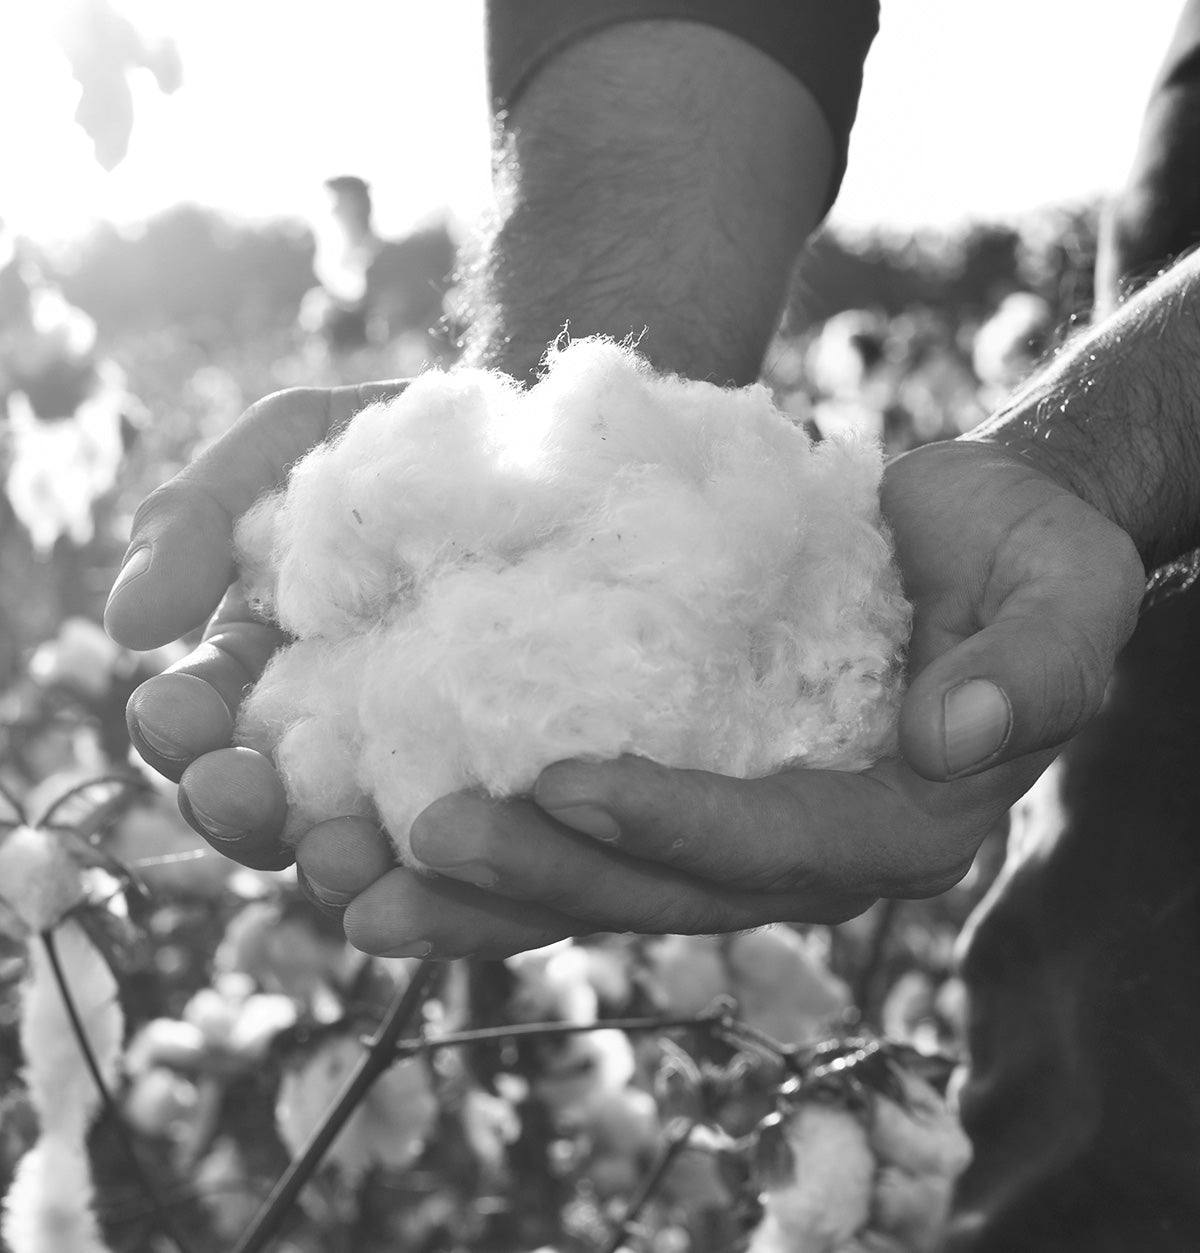 organic pima cotton clothing from peru - ethically made fair trade